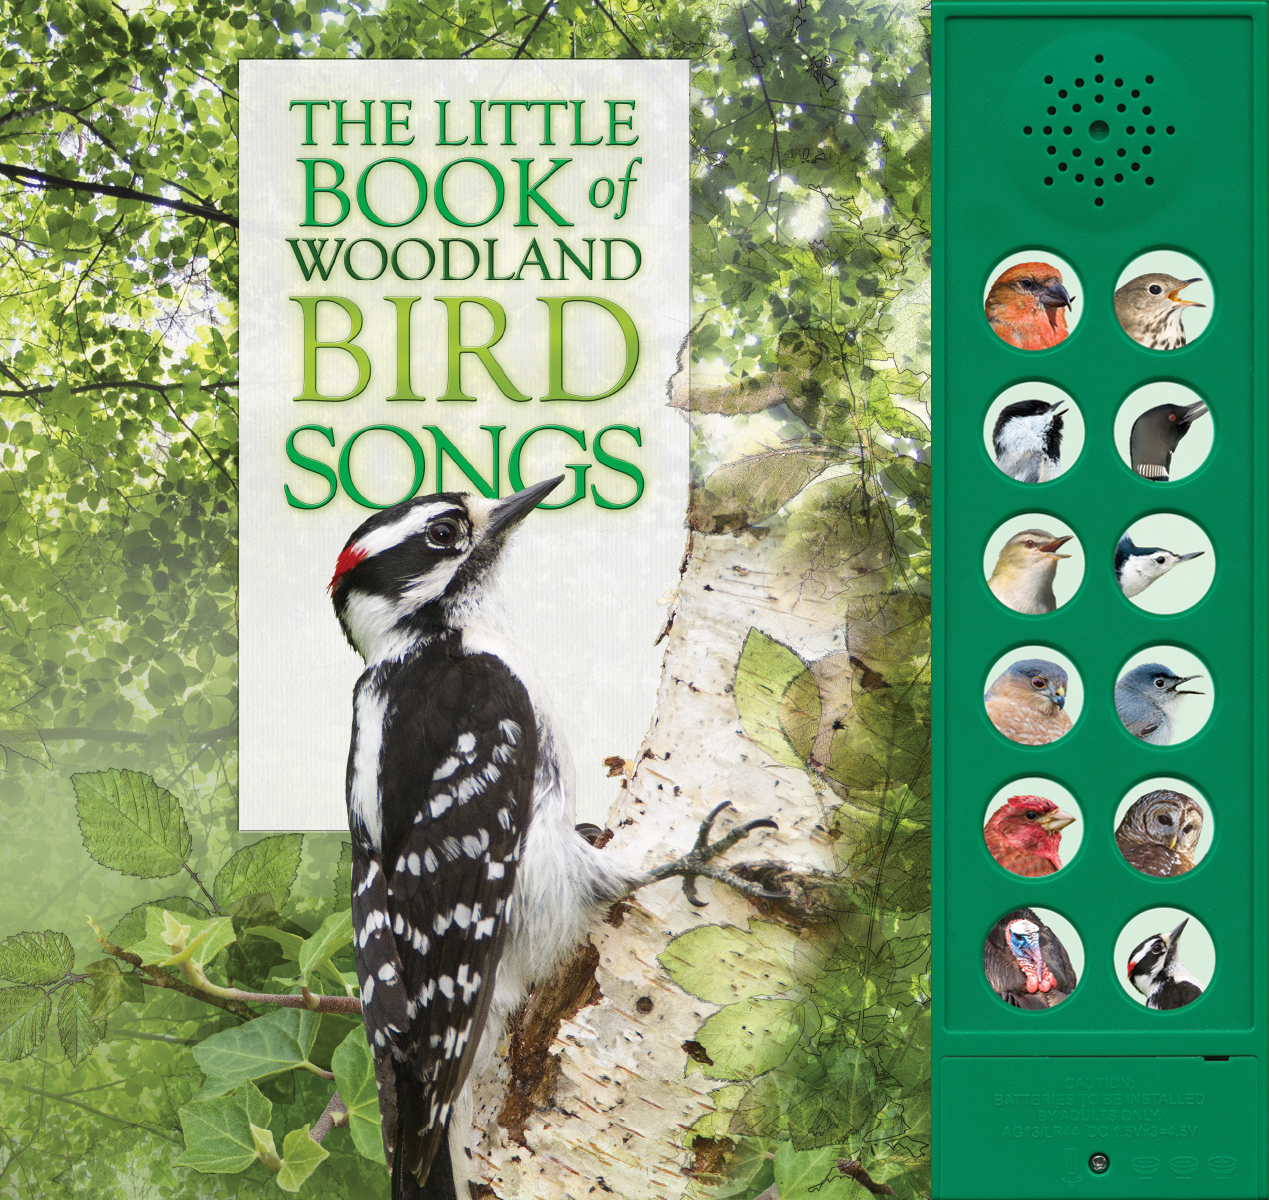 Little Book of Woodland Bird Songs, The